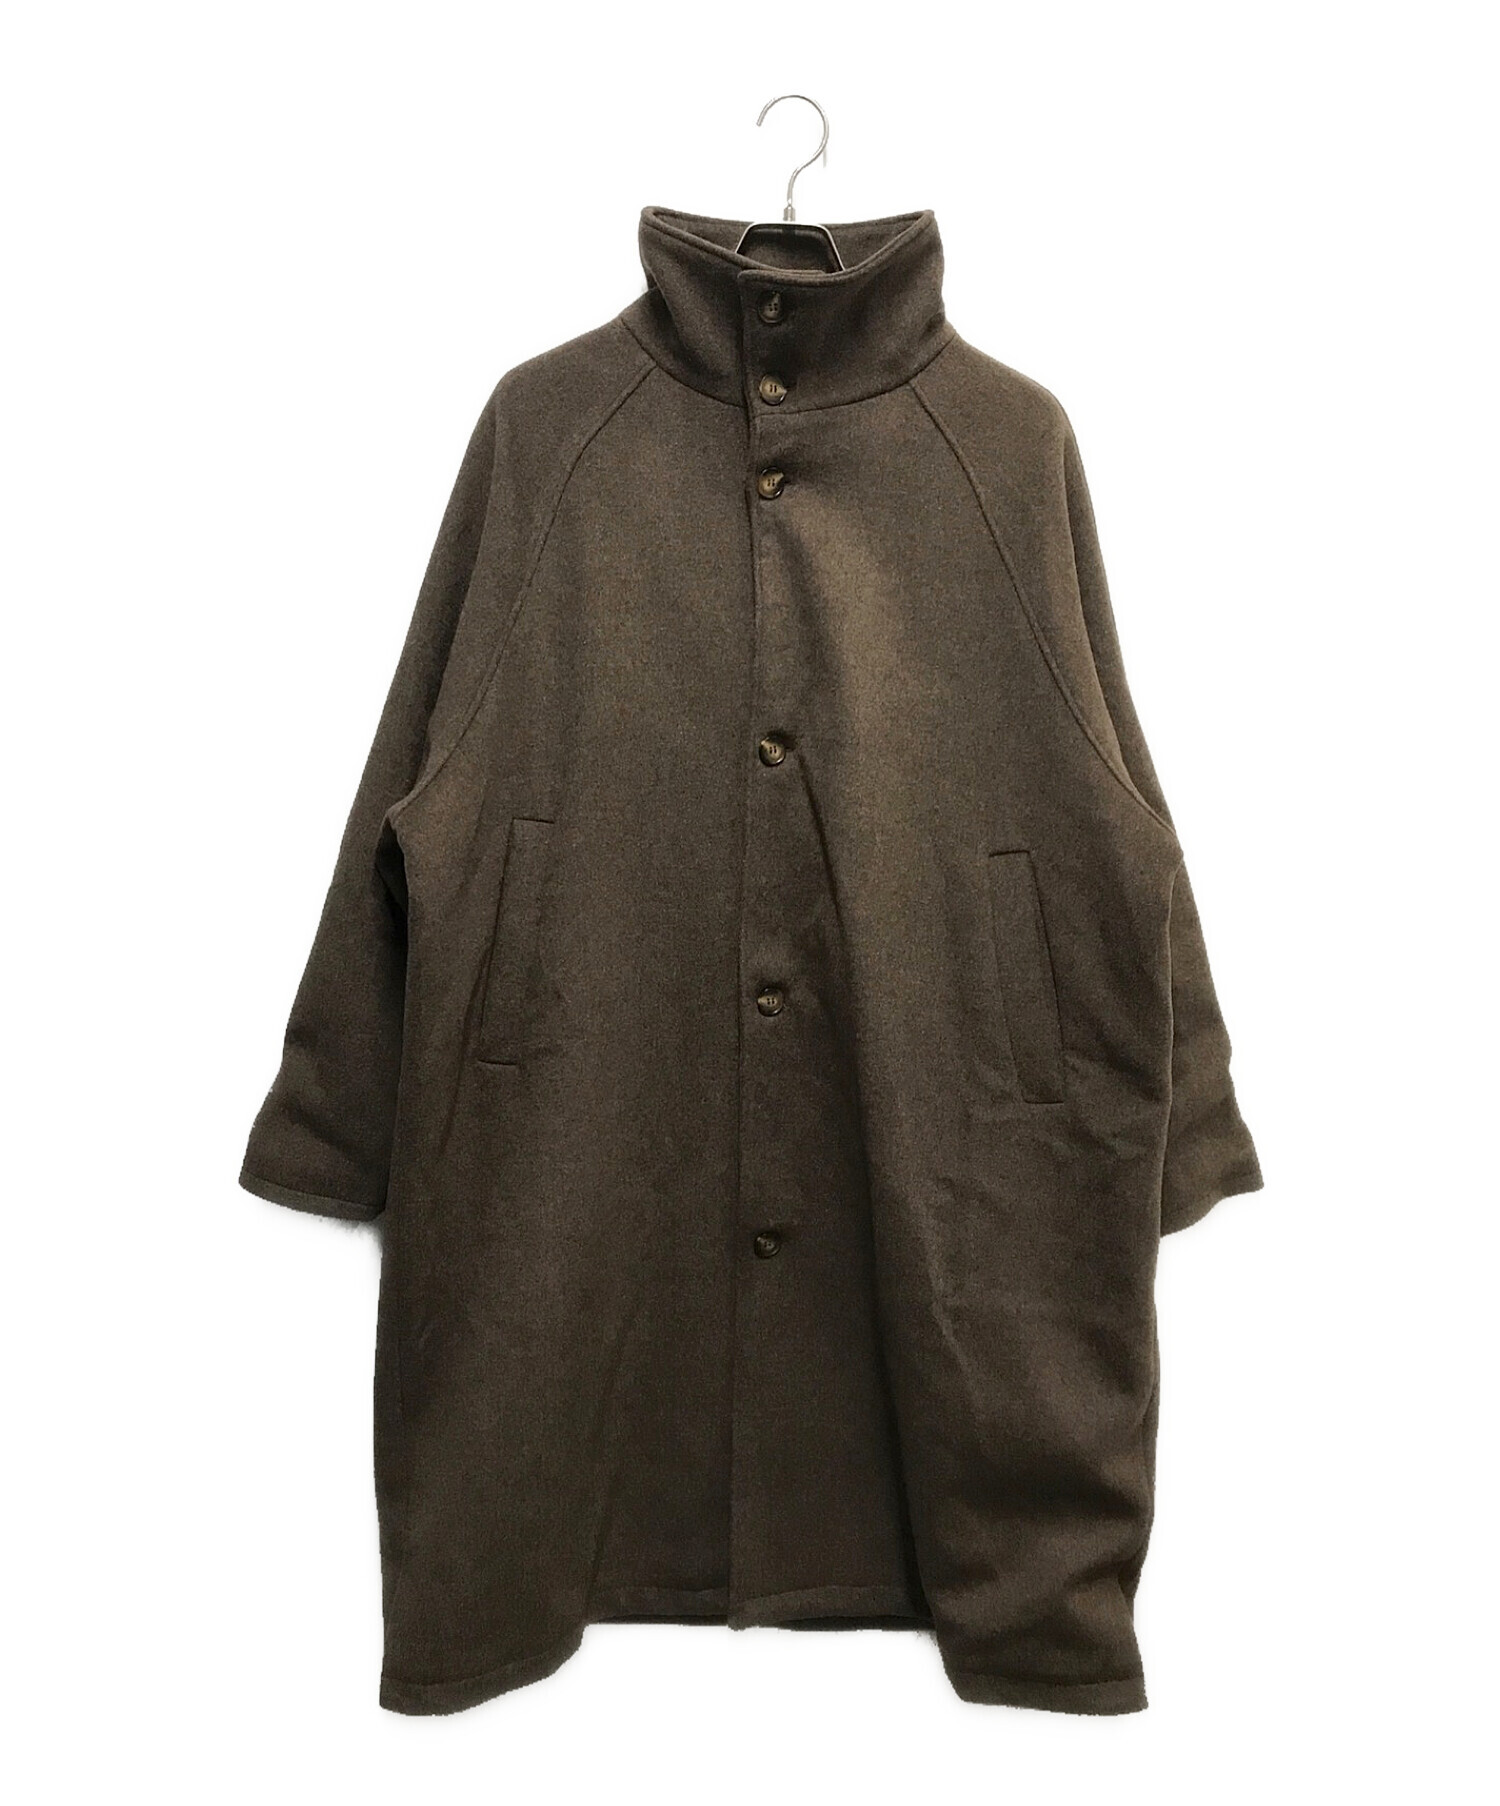 kaoyorinakami (カオヨリナカミ) stand collar coat ブラウン サイズ:M